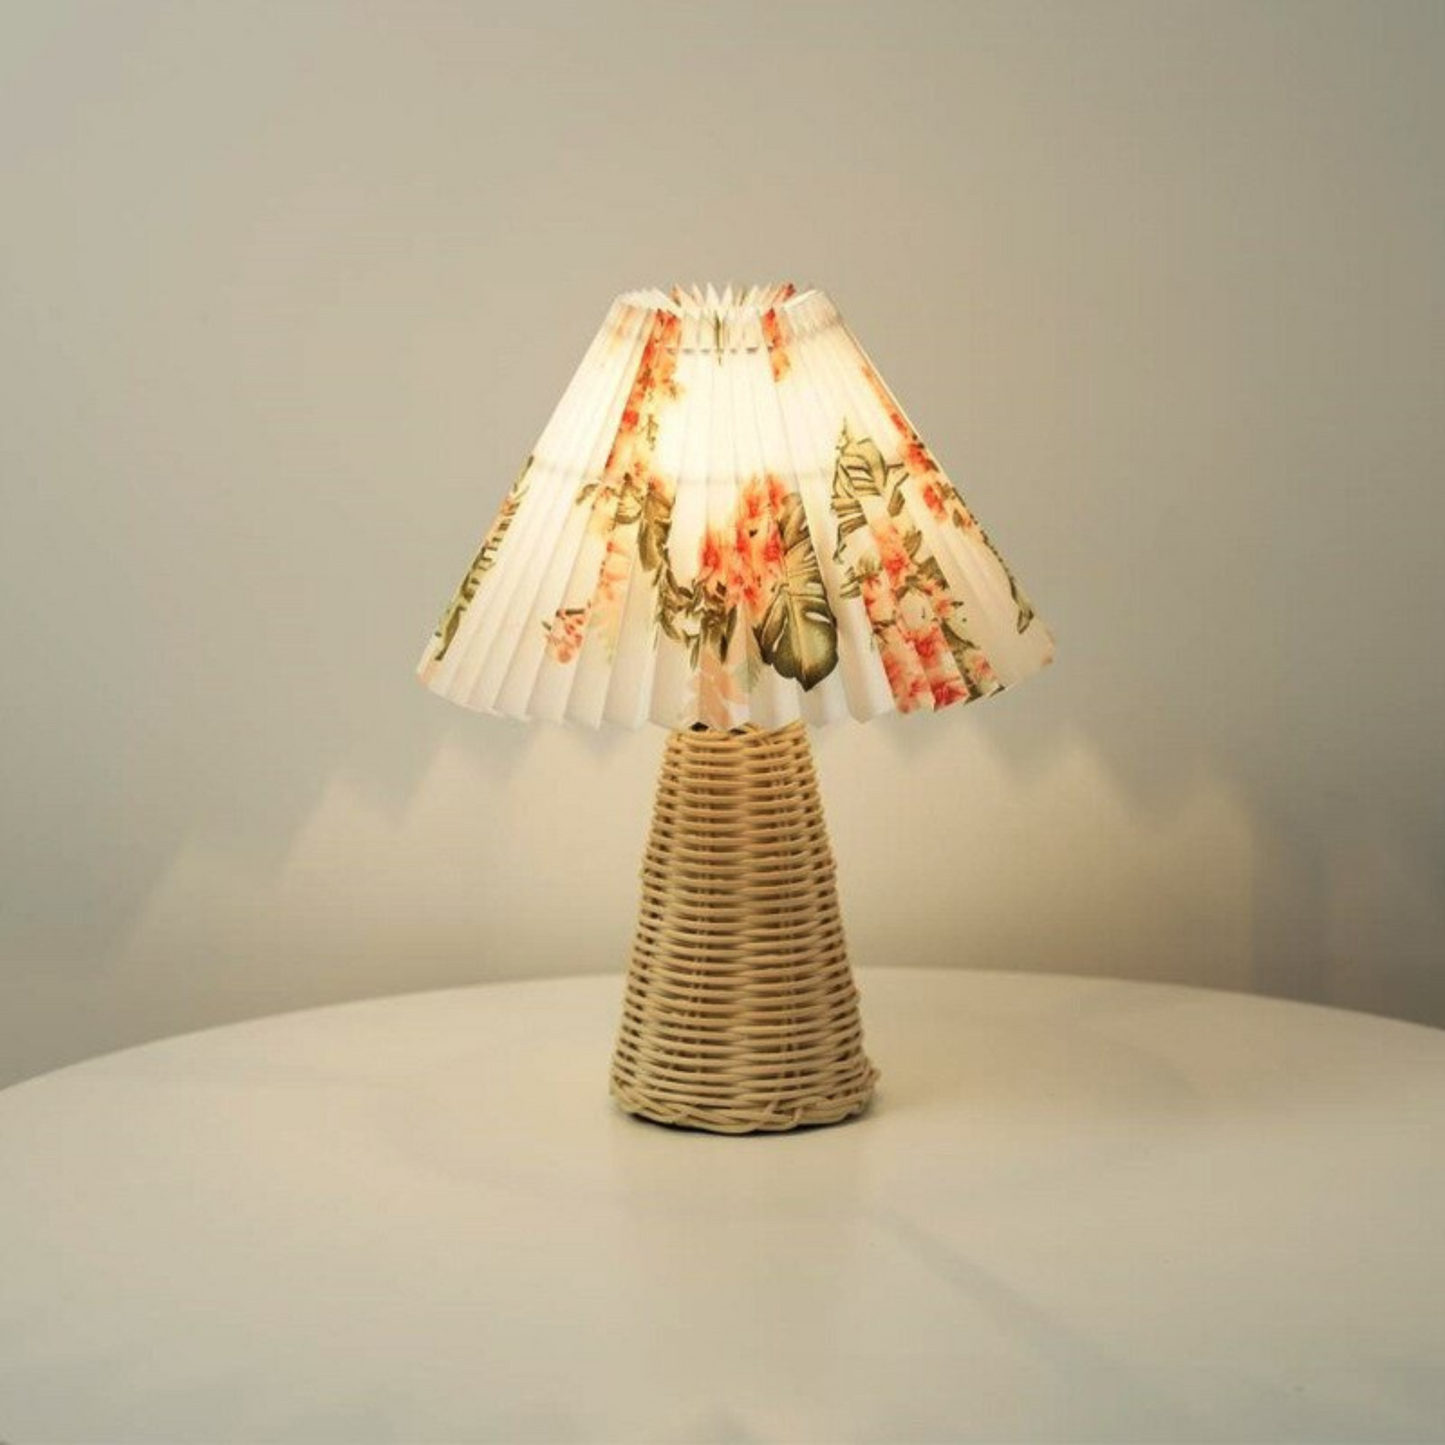 Vintage Japanese Rattan Lamp